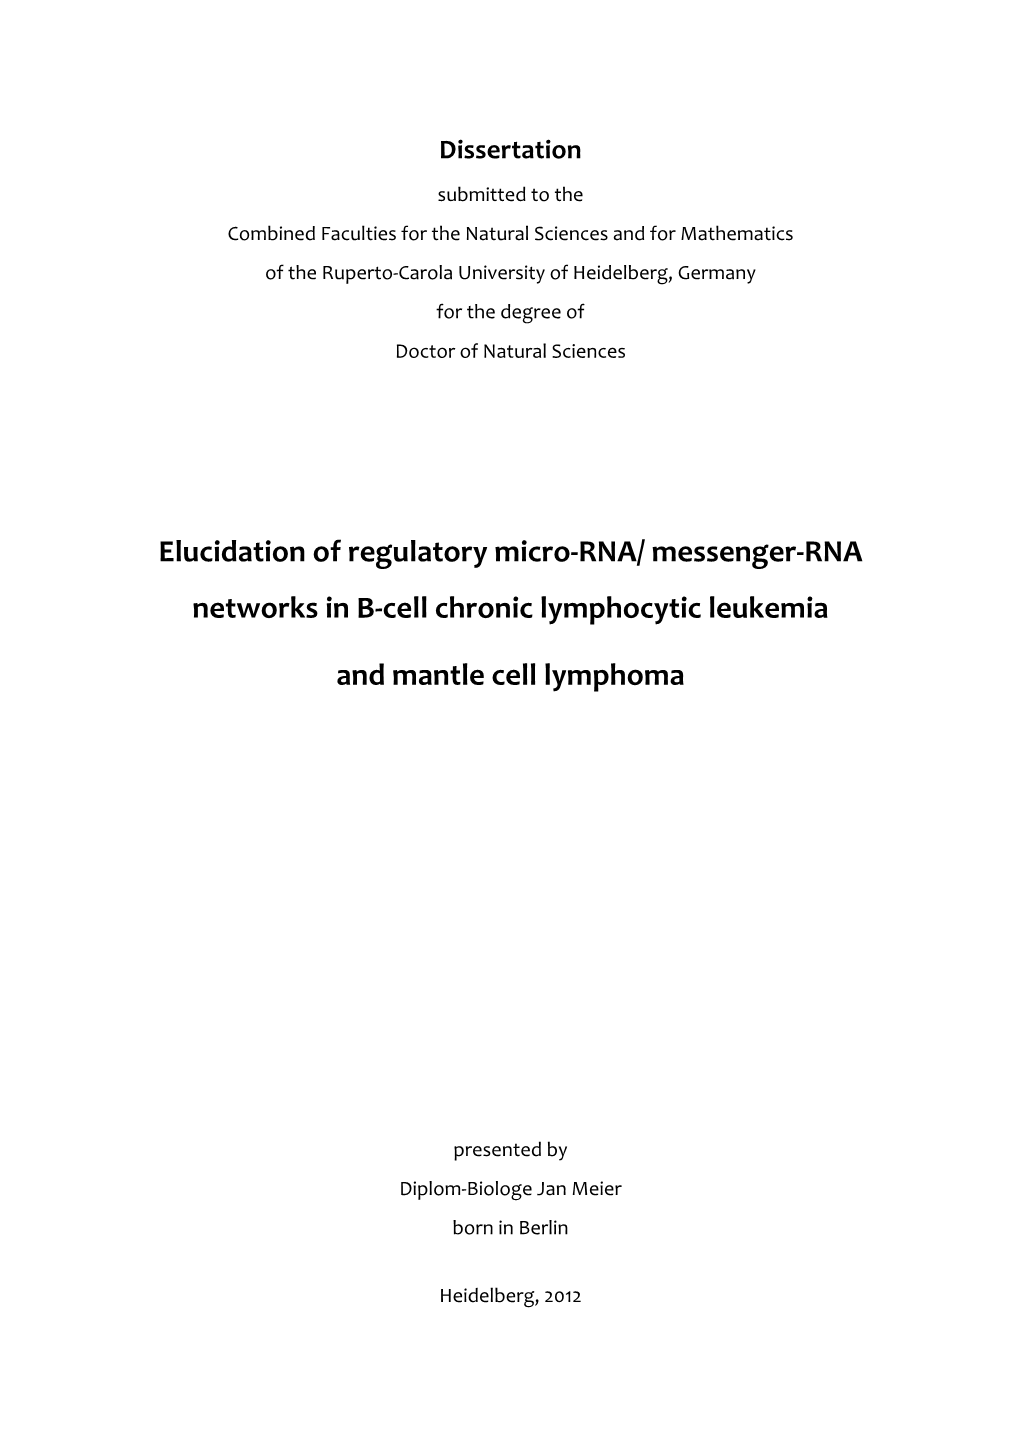 Messenger‐RNA Networks in B‐Cell Chronic Lymphocytic Leukemia